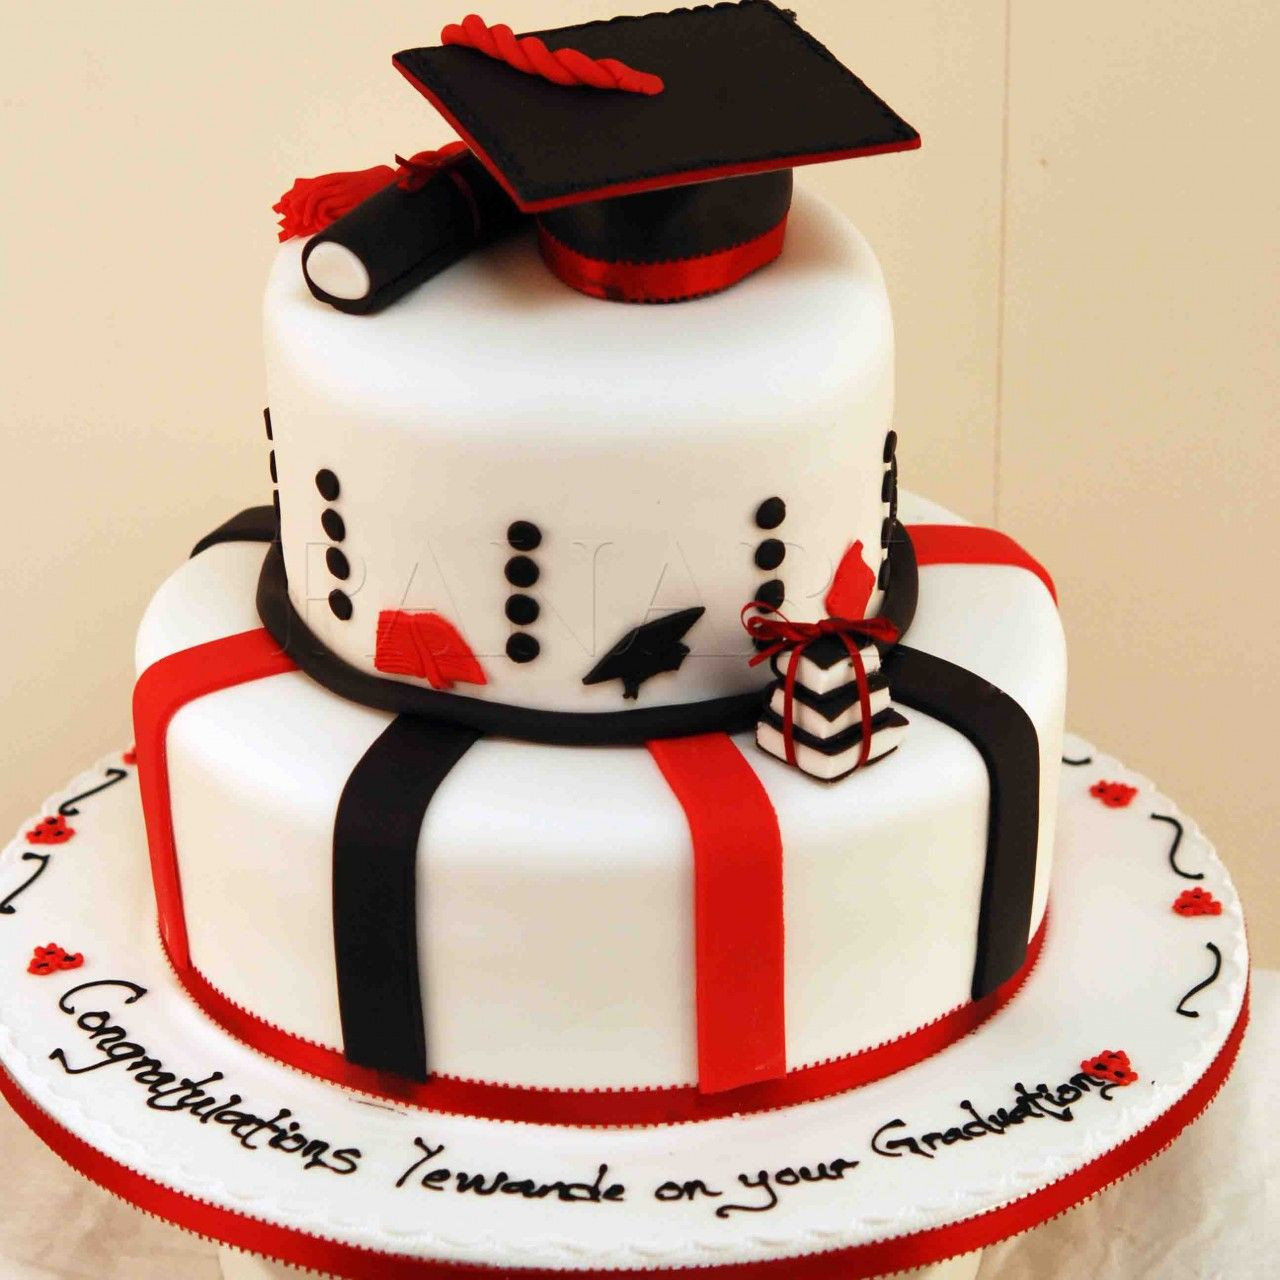 Cake Ideas For Graduation Party
 Graduation Cake Ideas Top Graduation Cakes graduation